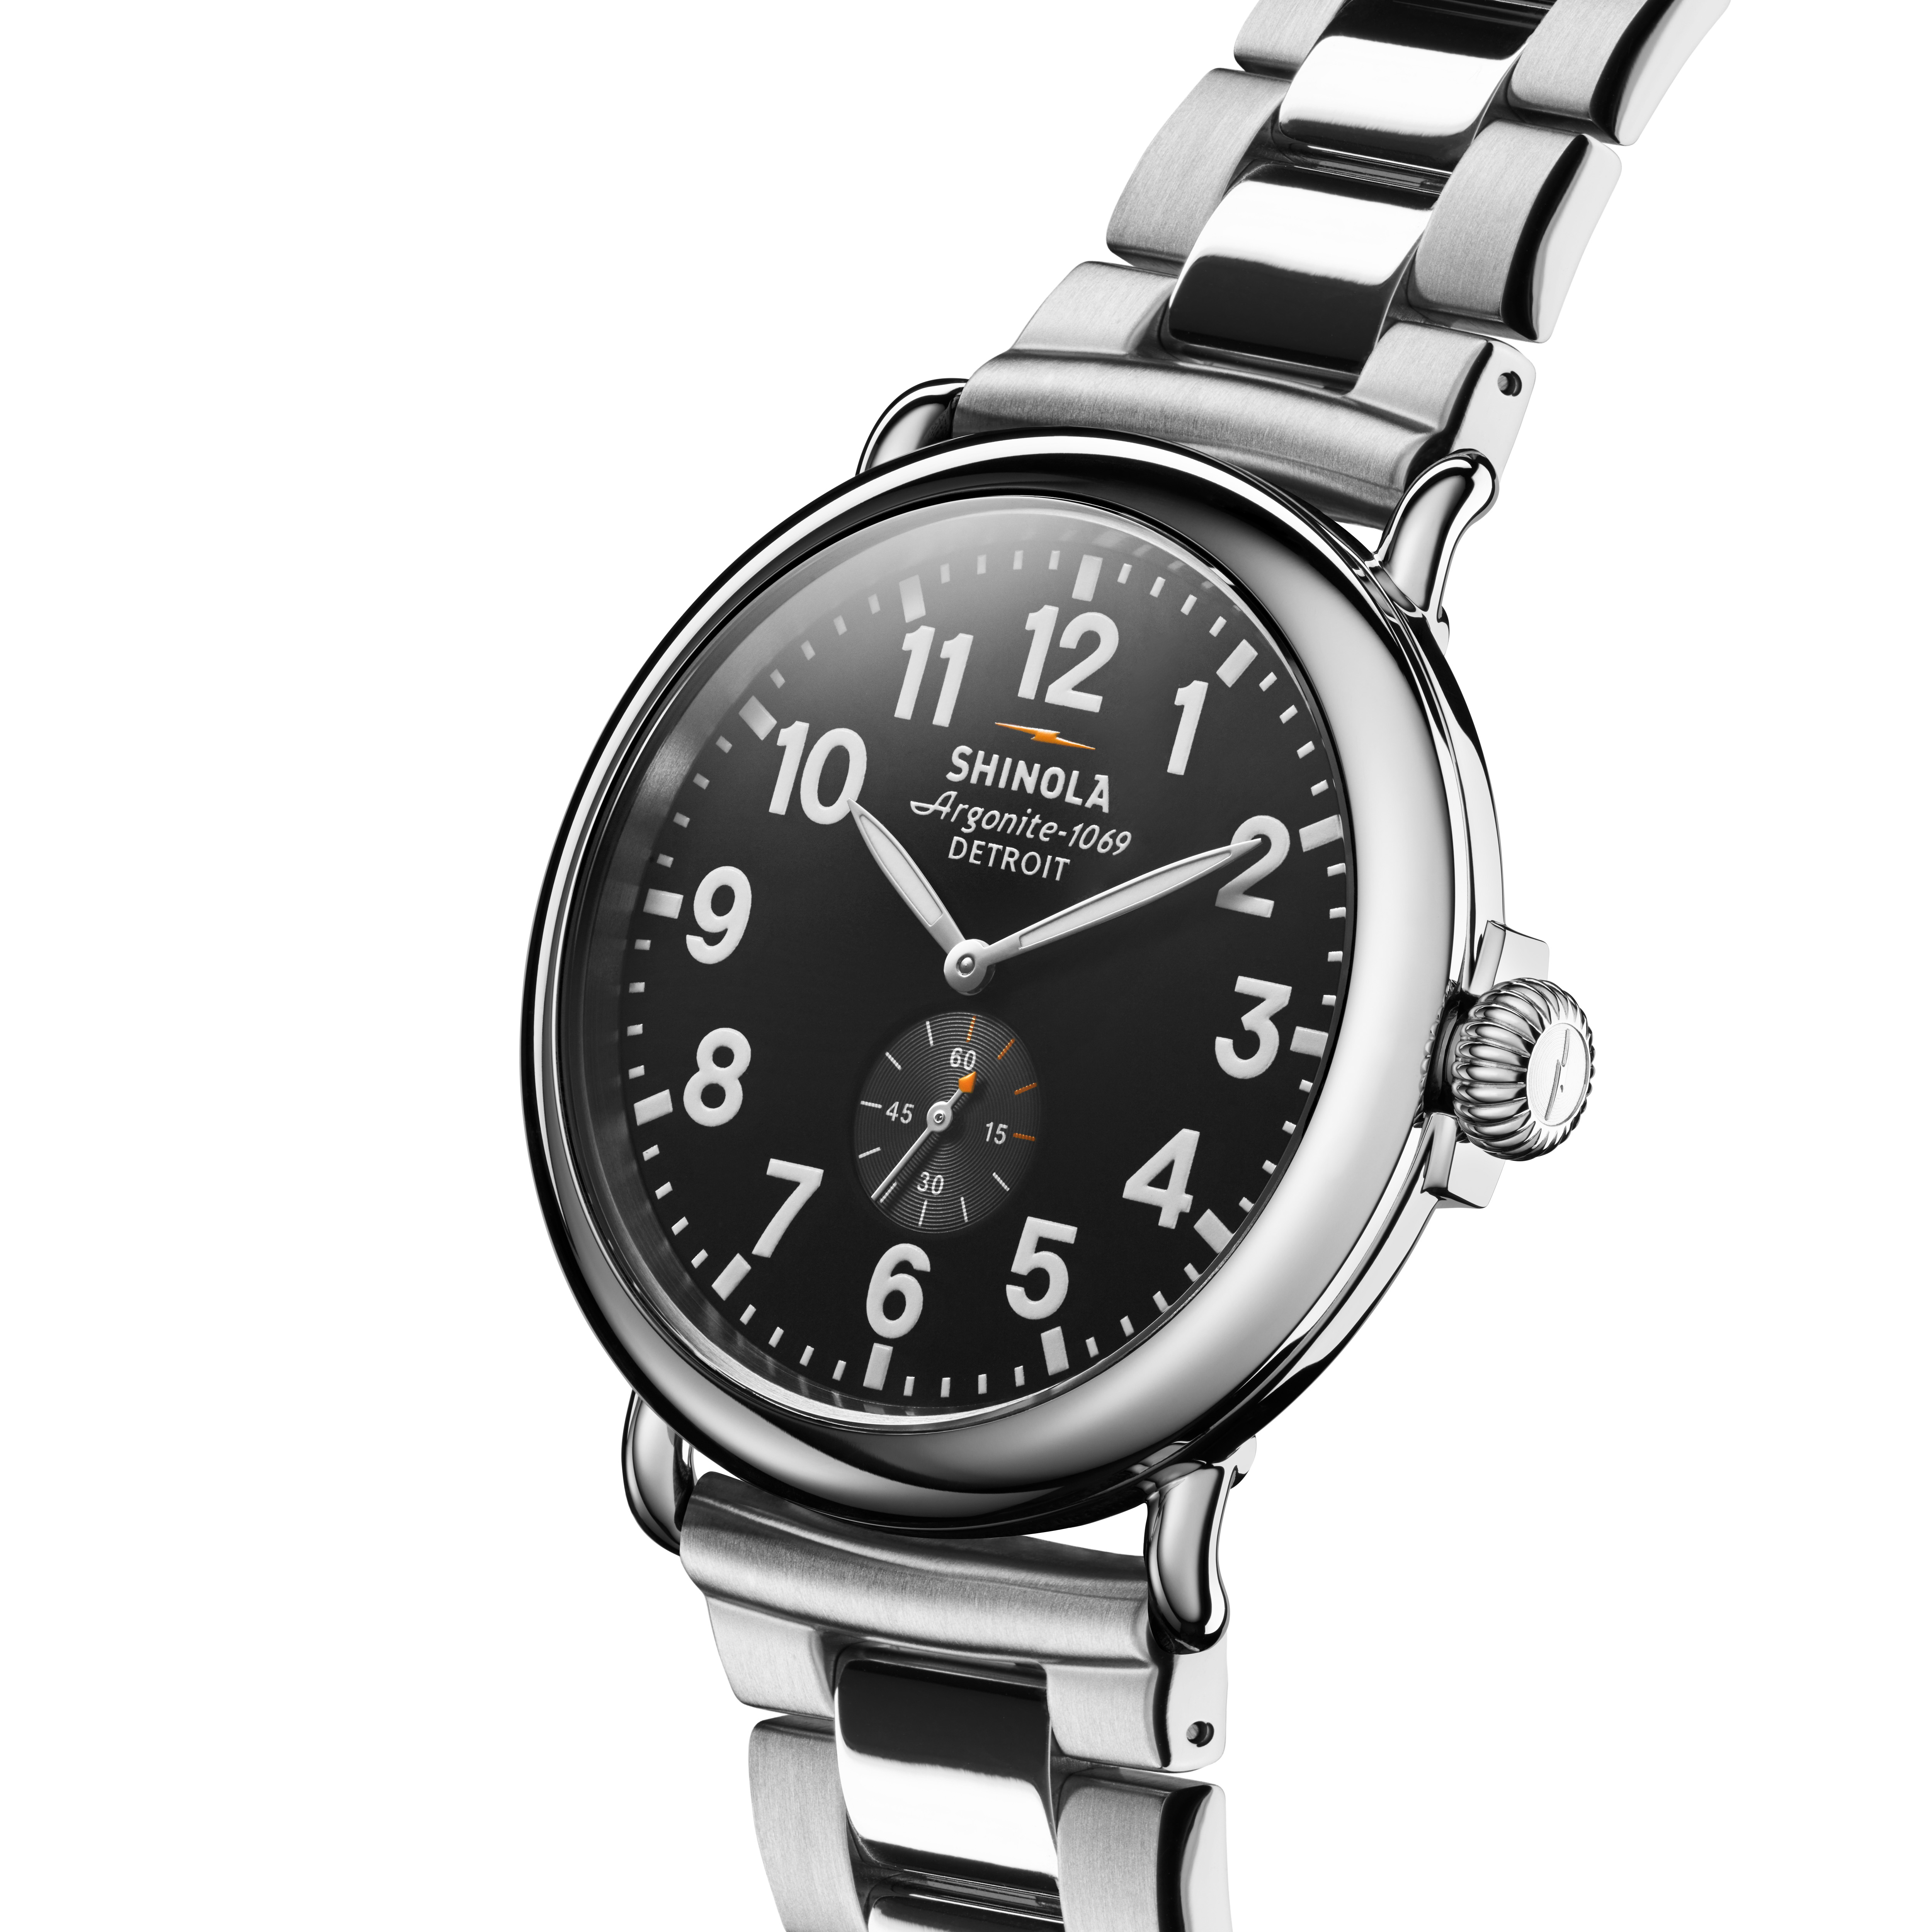 Buy Amazfit GTR 47mm (Refurbished) Smart Watch @ ₹3999.0 | Amazfit Official  Store